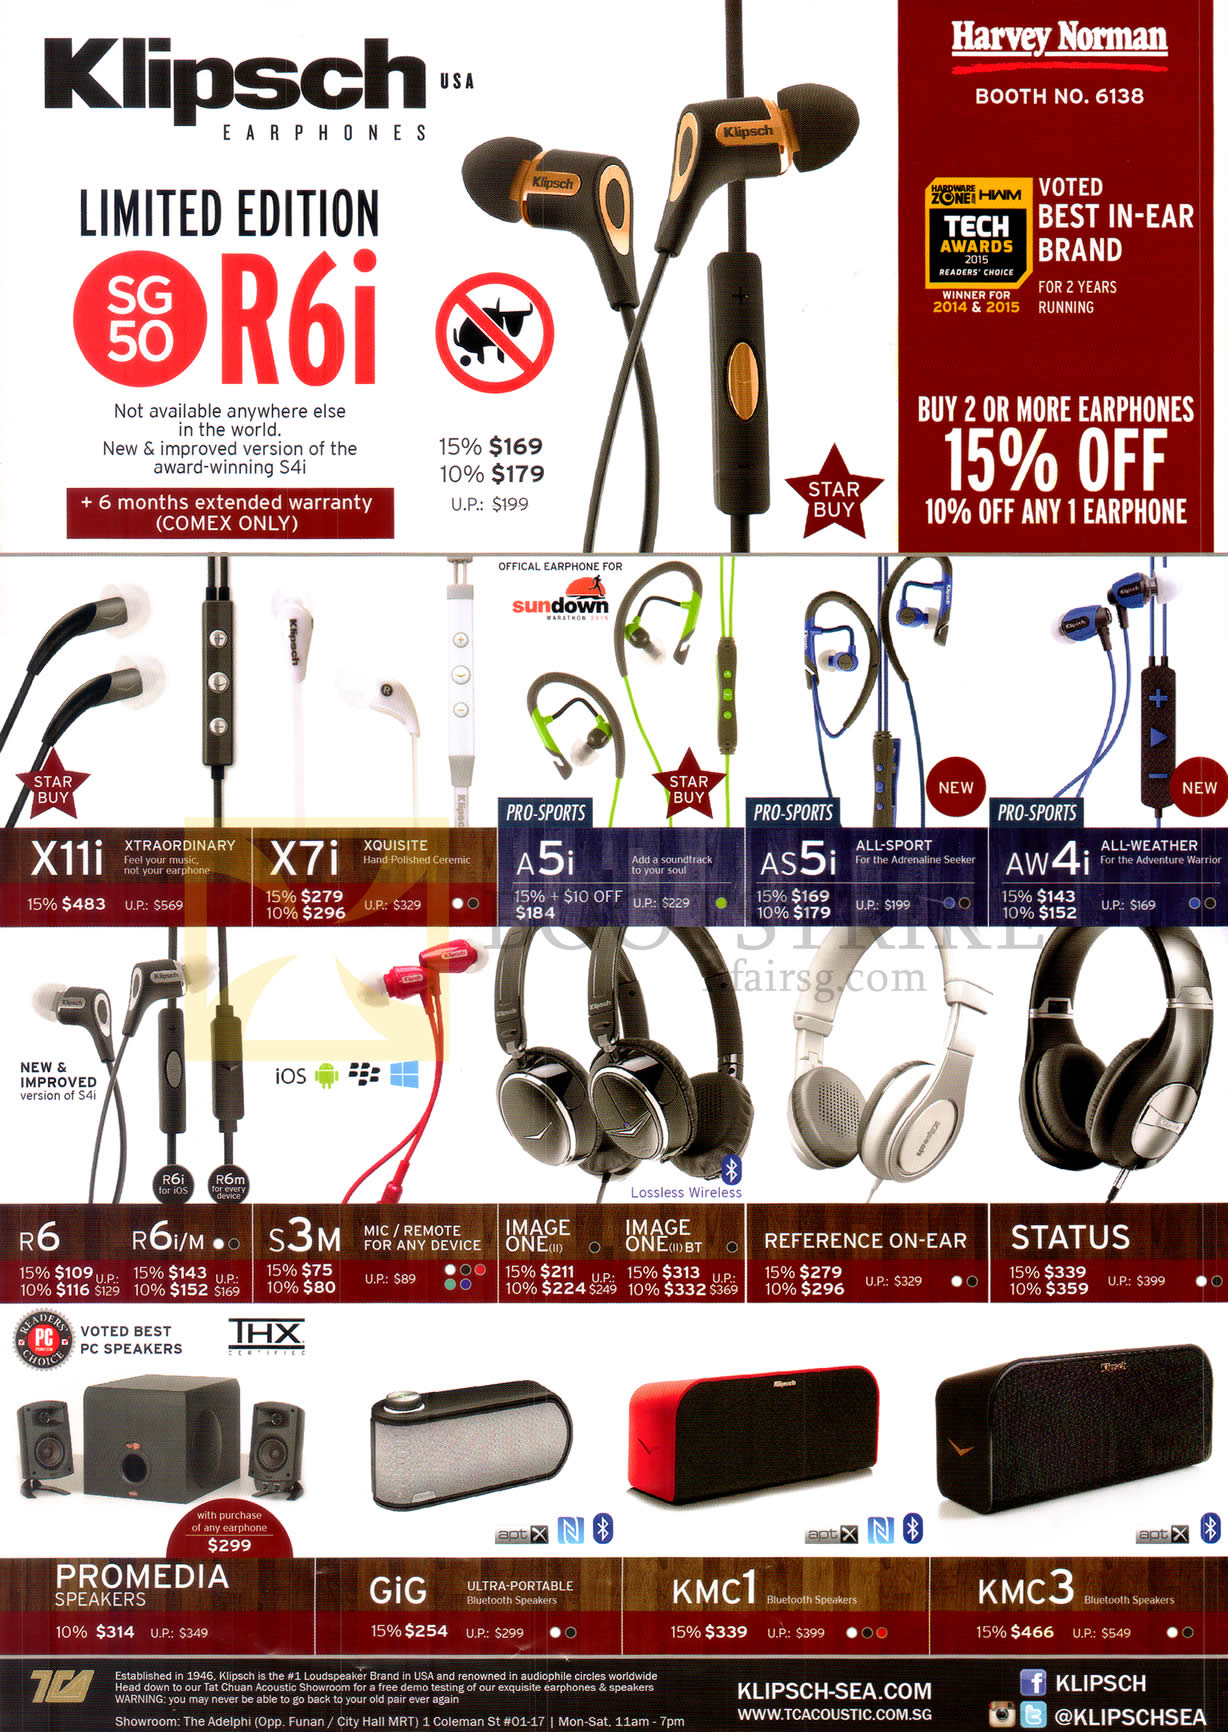 COMEX 2015 price list image brochure of Harvey Norman Klipsch Earphones, Headphones, Speakers, R6i, X11i, X7i, A5i, AS5i, AW4i, R6, R6IM, S3M, Image One, Reference ON Ear, Status, Promedia, Gig, KMC1, KMC3